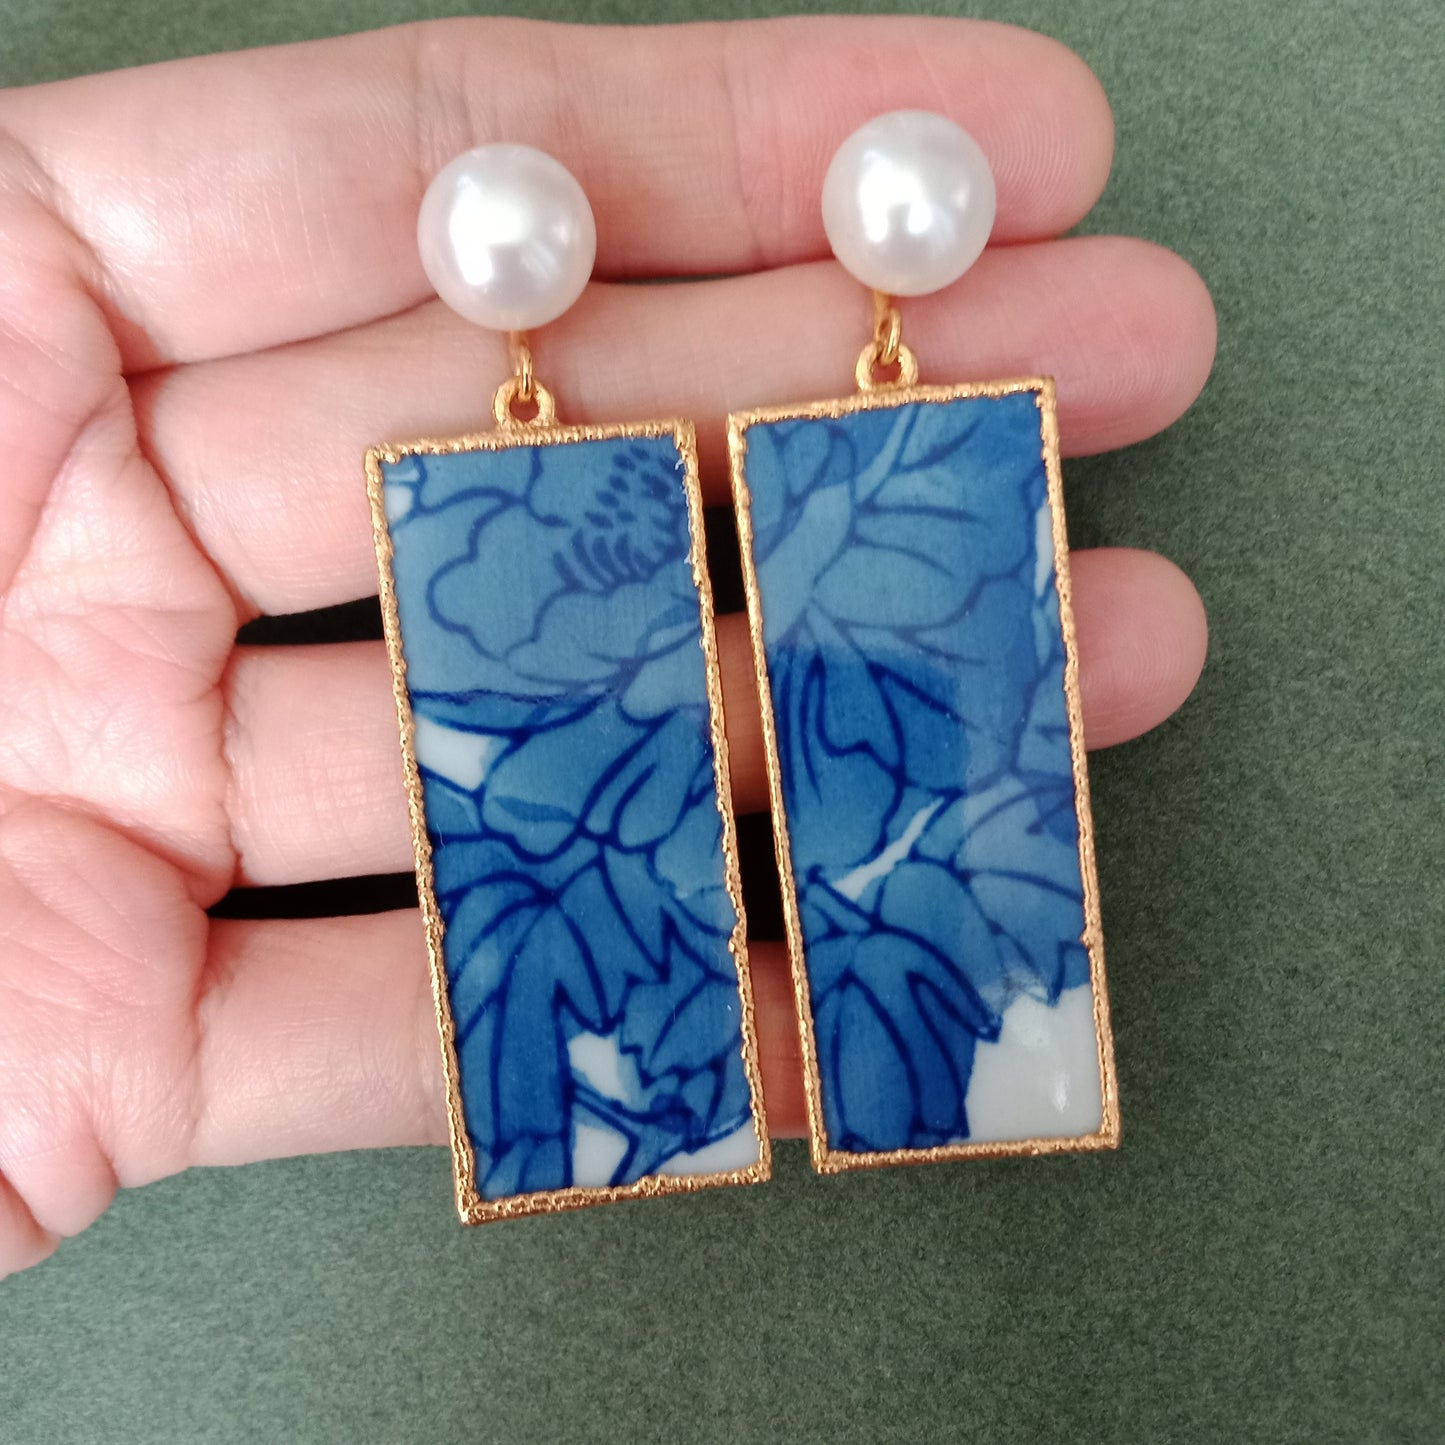 Blue and white foliage porcelain earrings